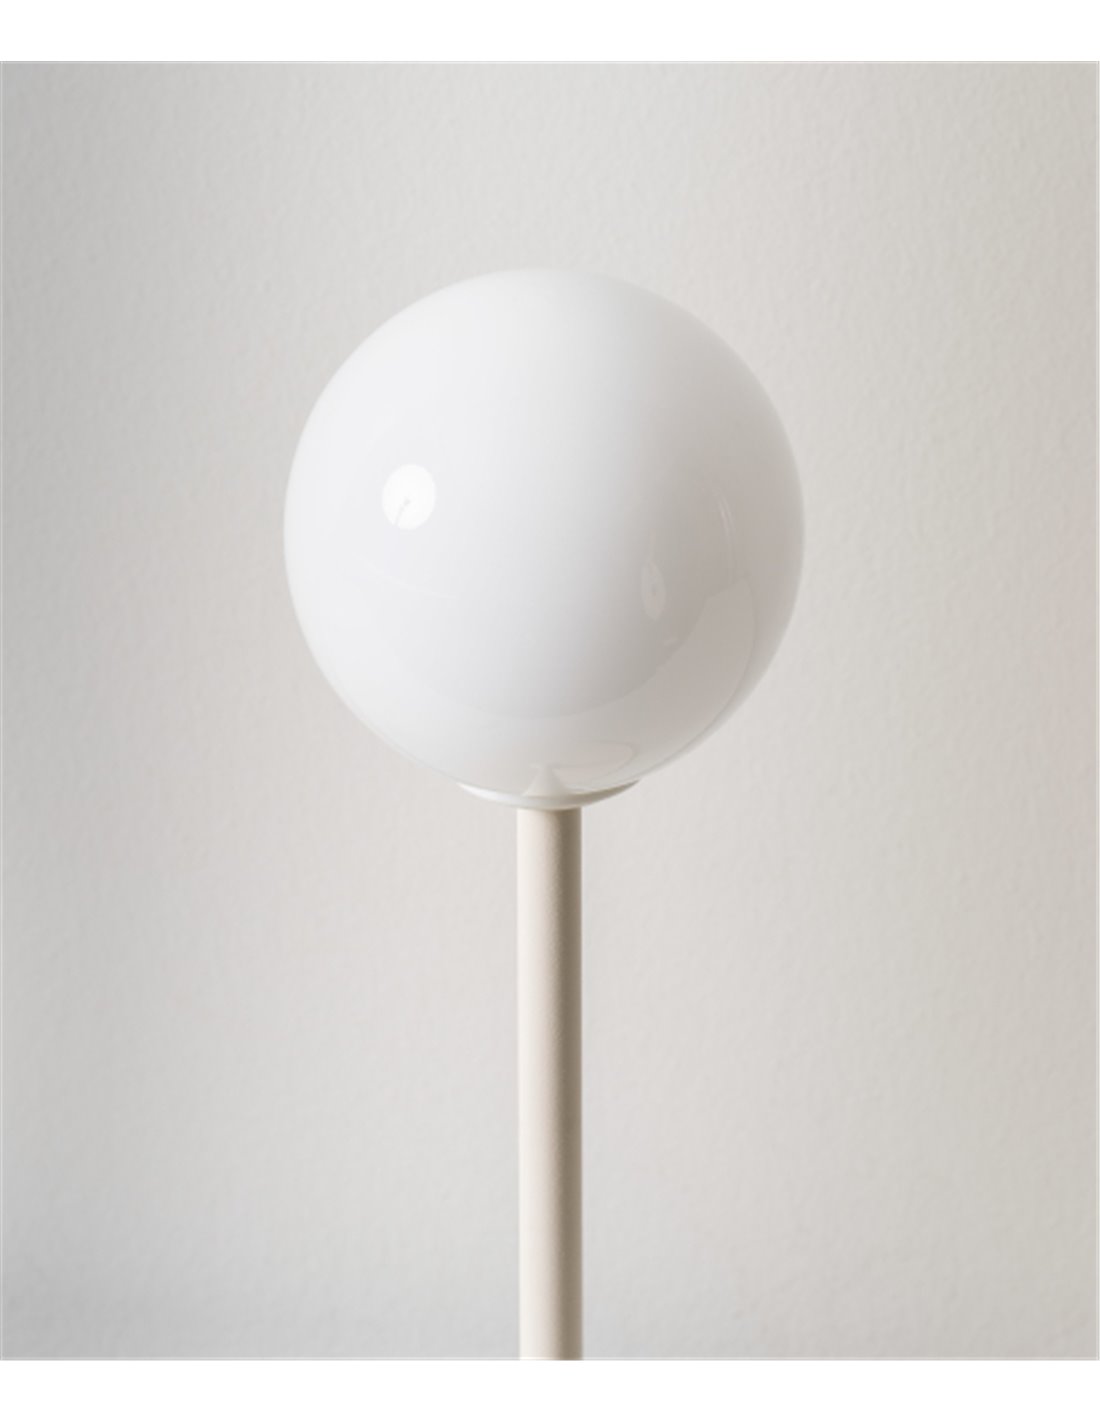 Symphony pendant light - Milan - Modern pendant lamp, Grey-Copper-Mink, Ø  30-45 cm